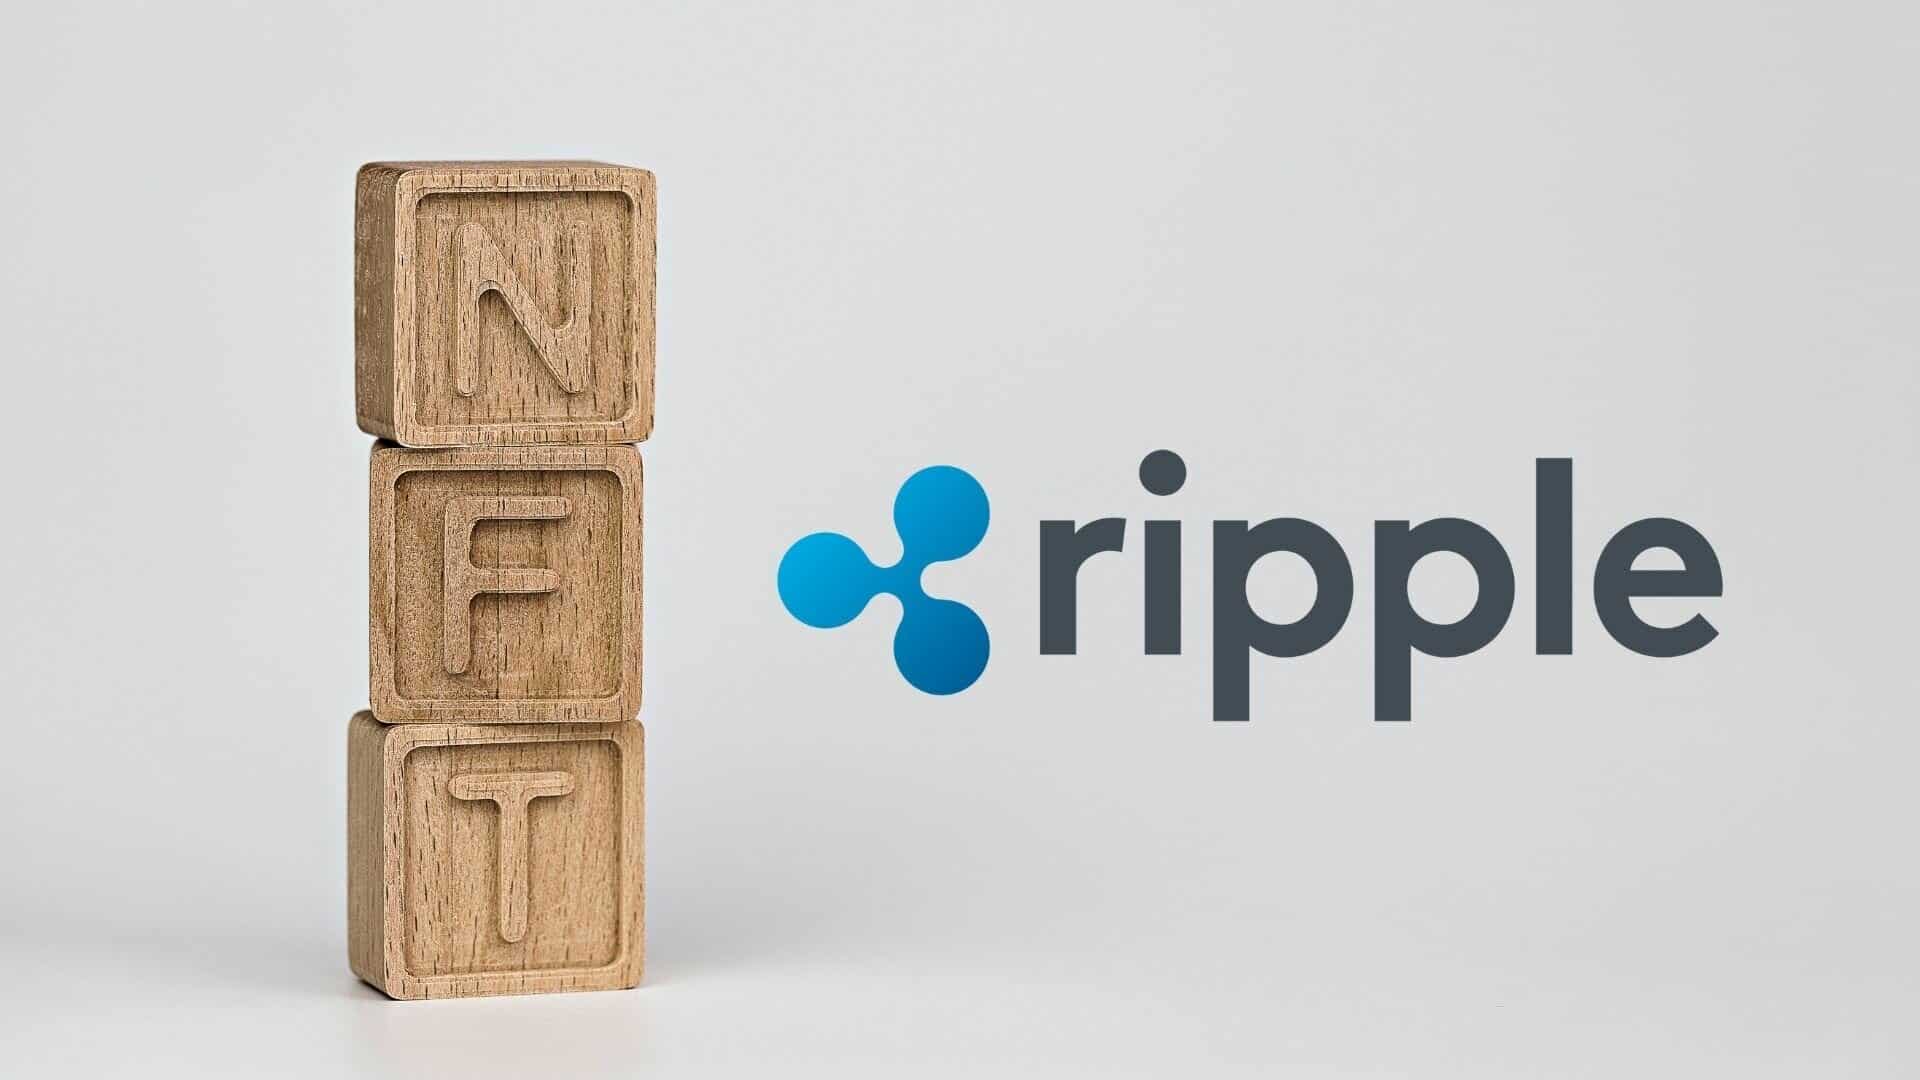 RippleX запустит платформу для разработчиков NFT